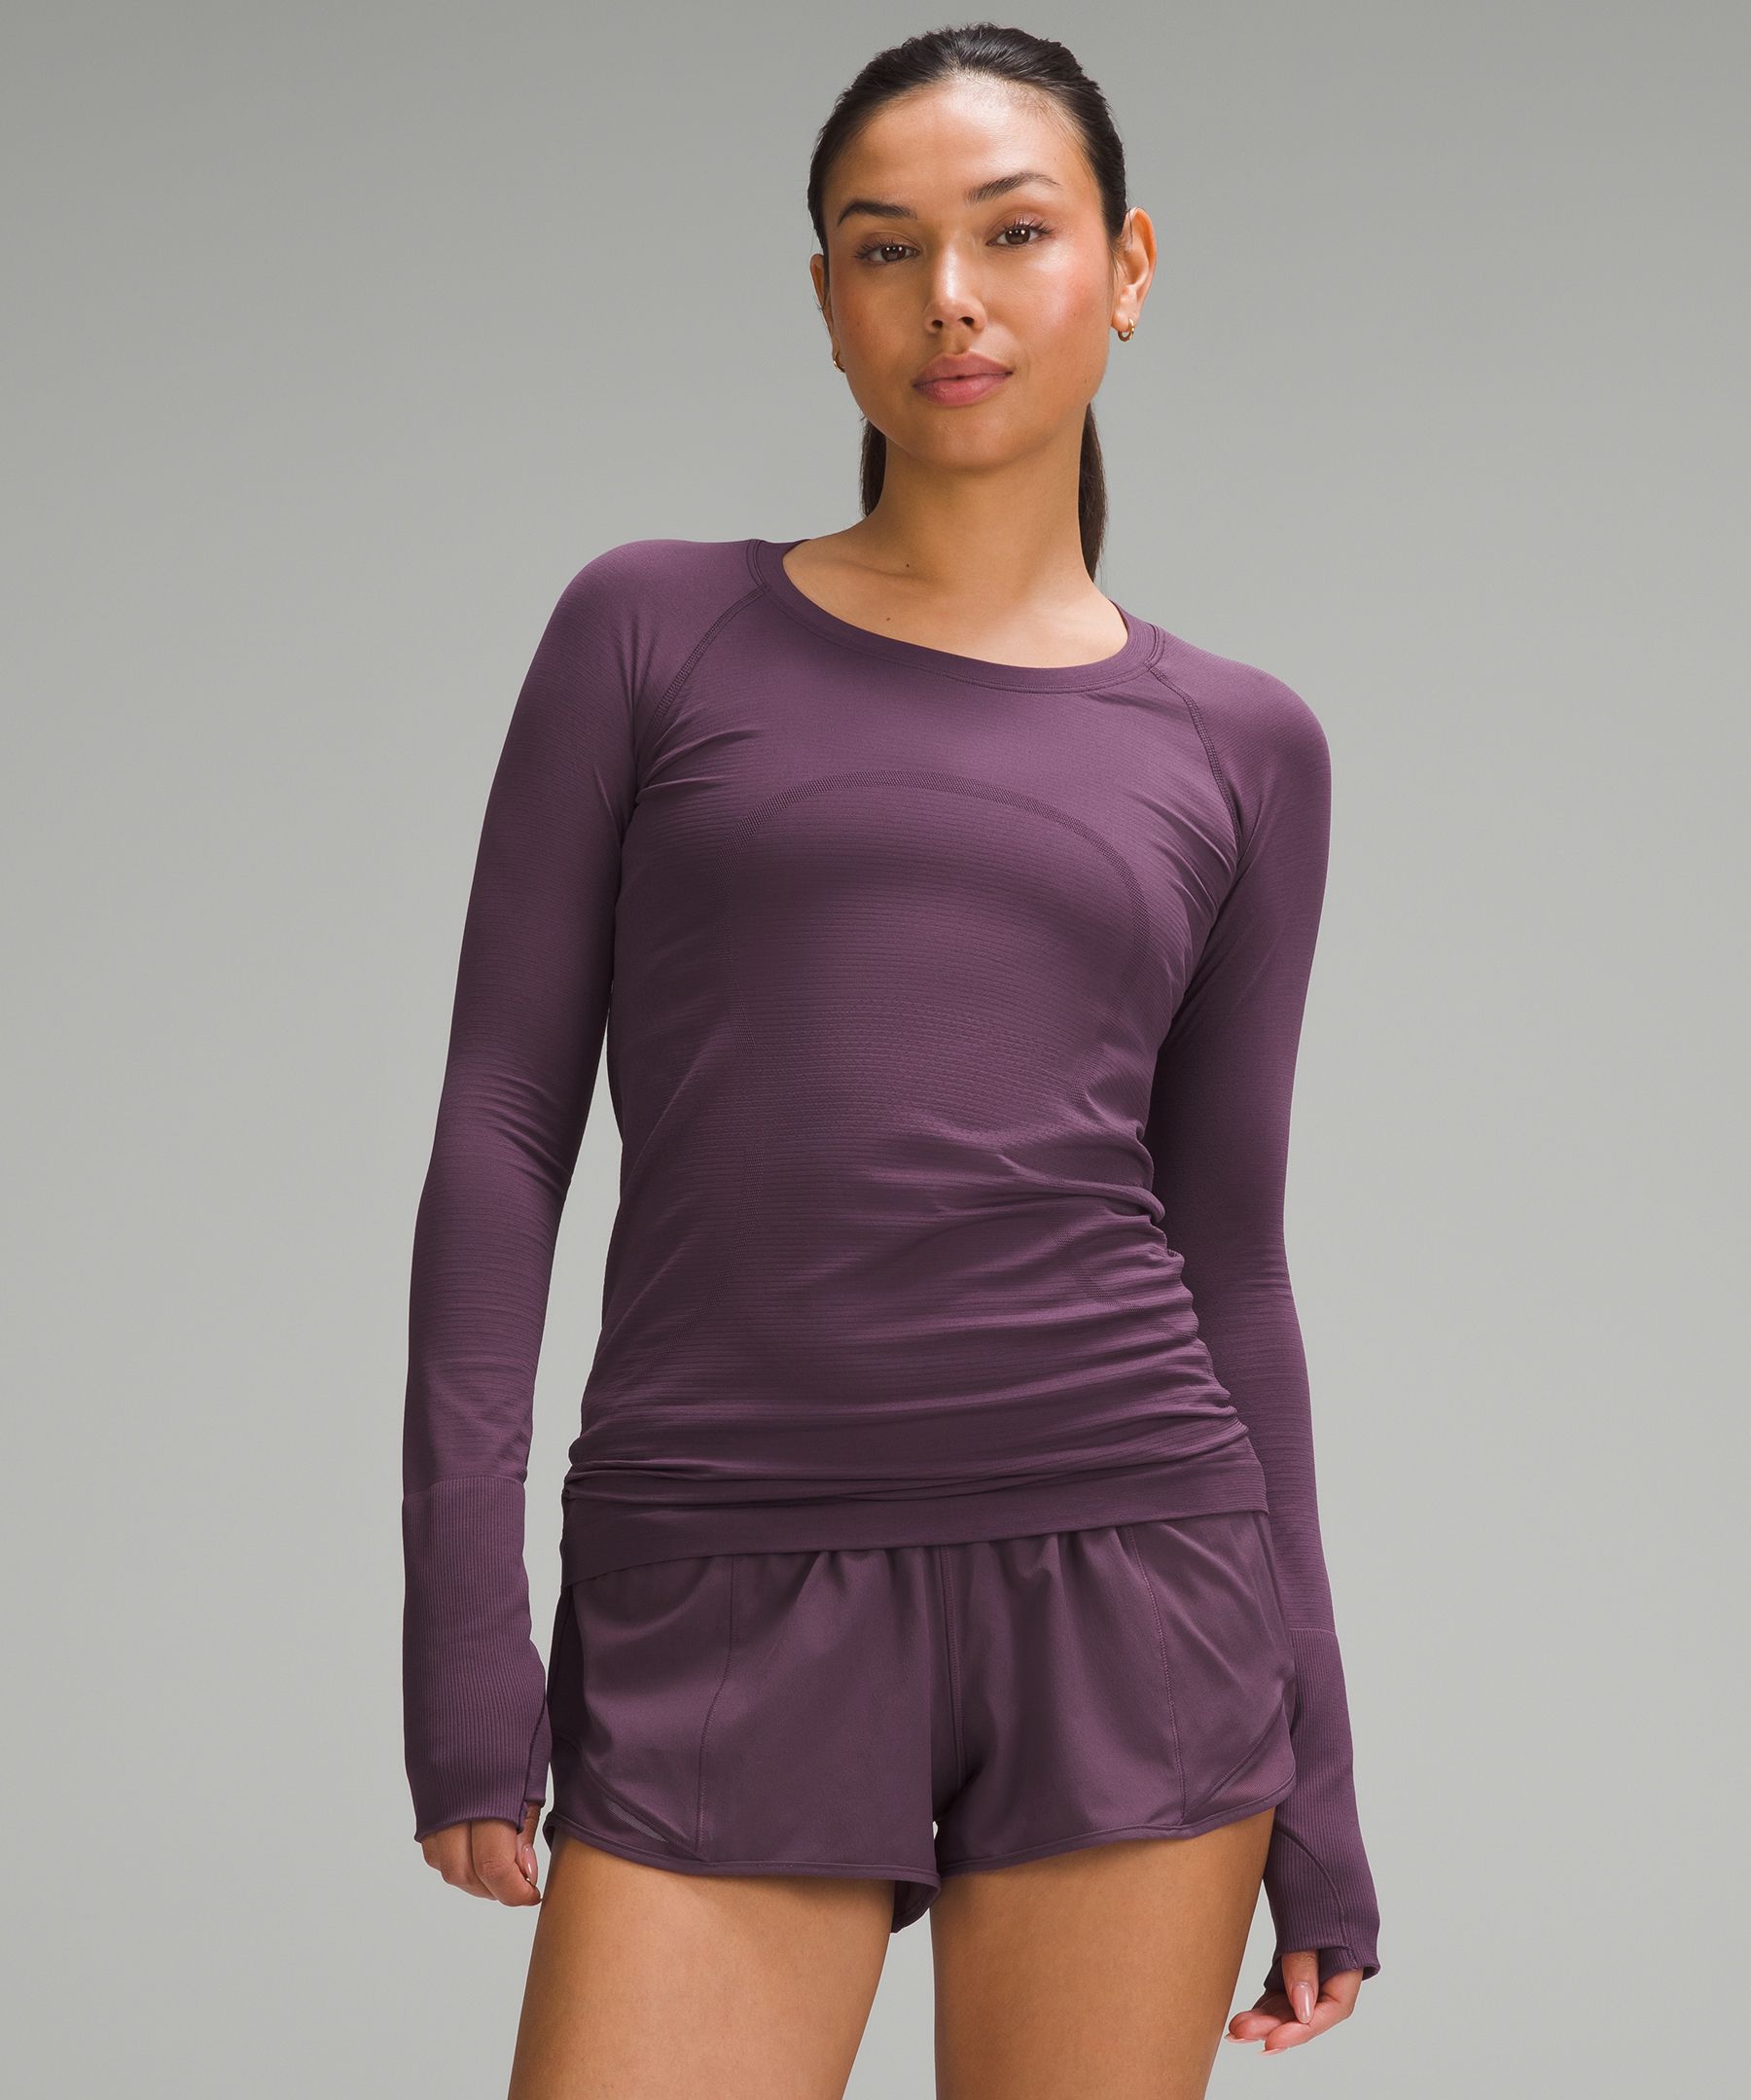 Lululemon Swiftly Tech Long Sleeve Shirt 2.0 In Purple